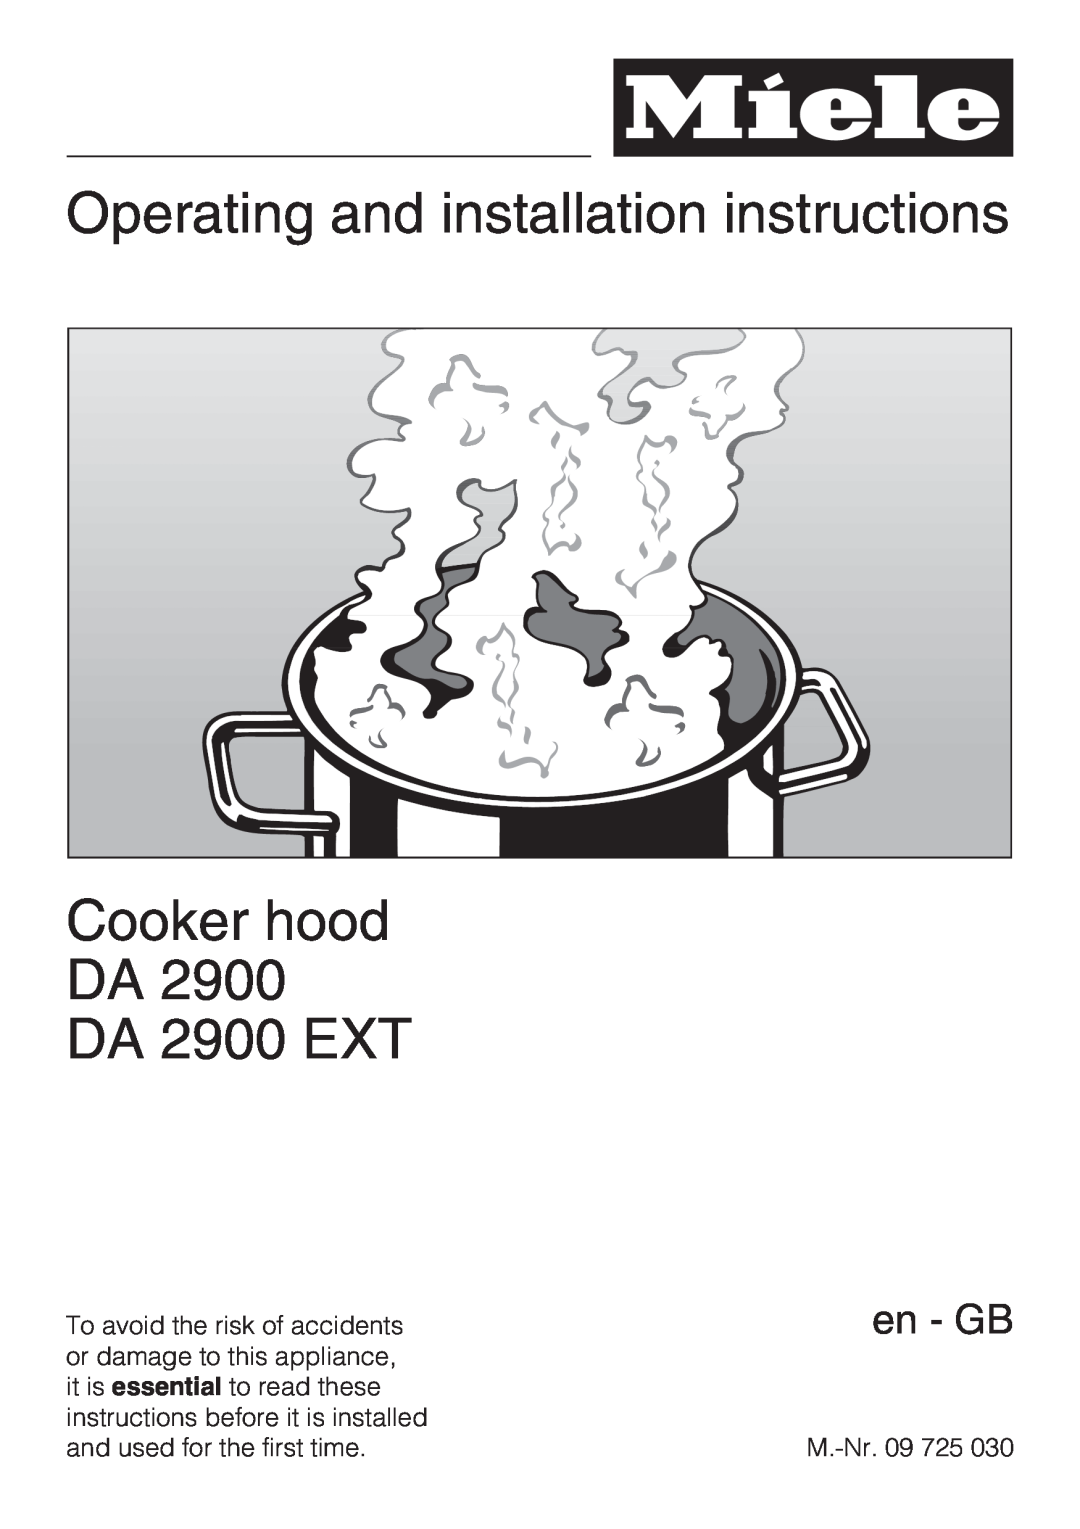 Miele DA2900EXT installation instructions Operating and installation instructions, Cooker hood DA DA 2900 EXT, en - GB 